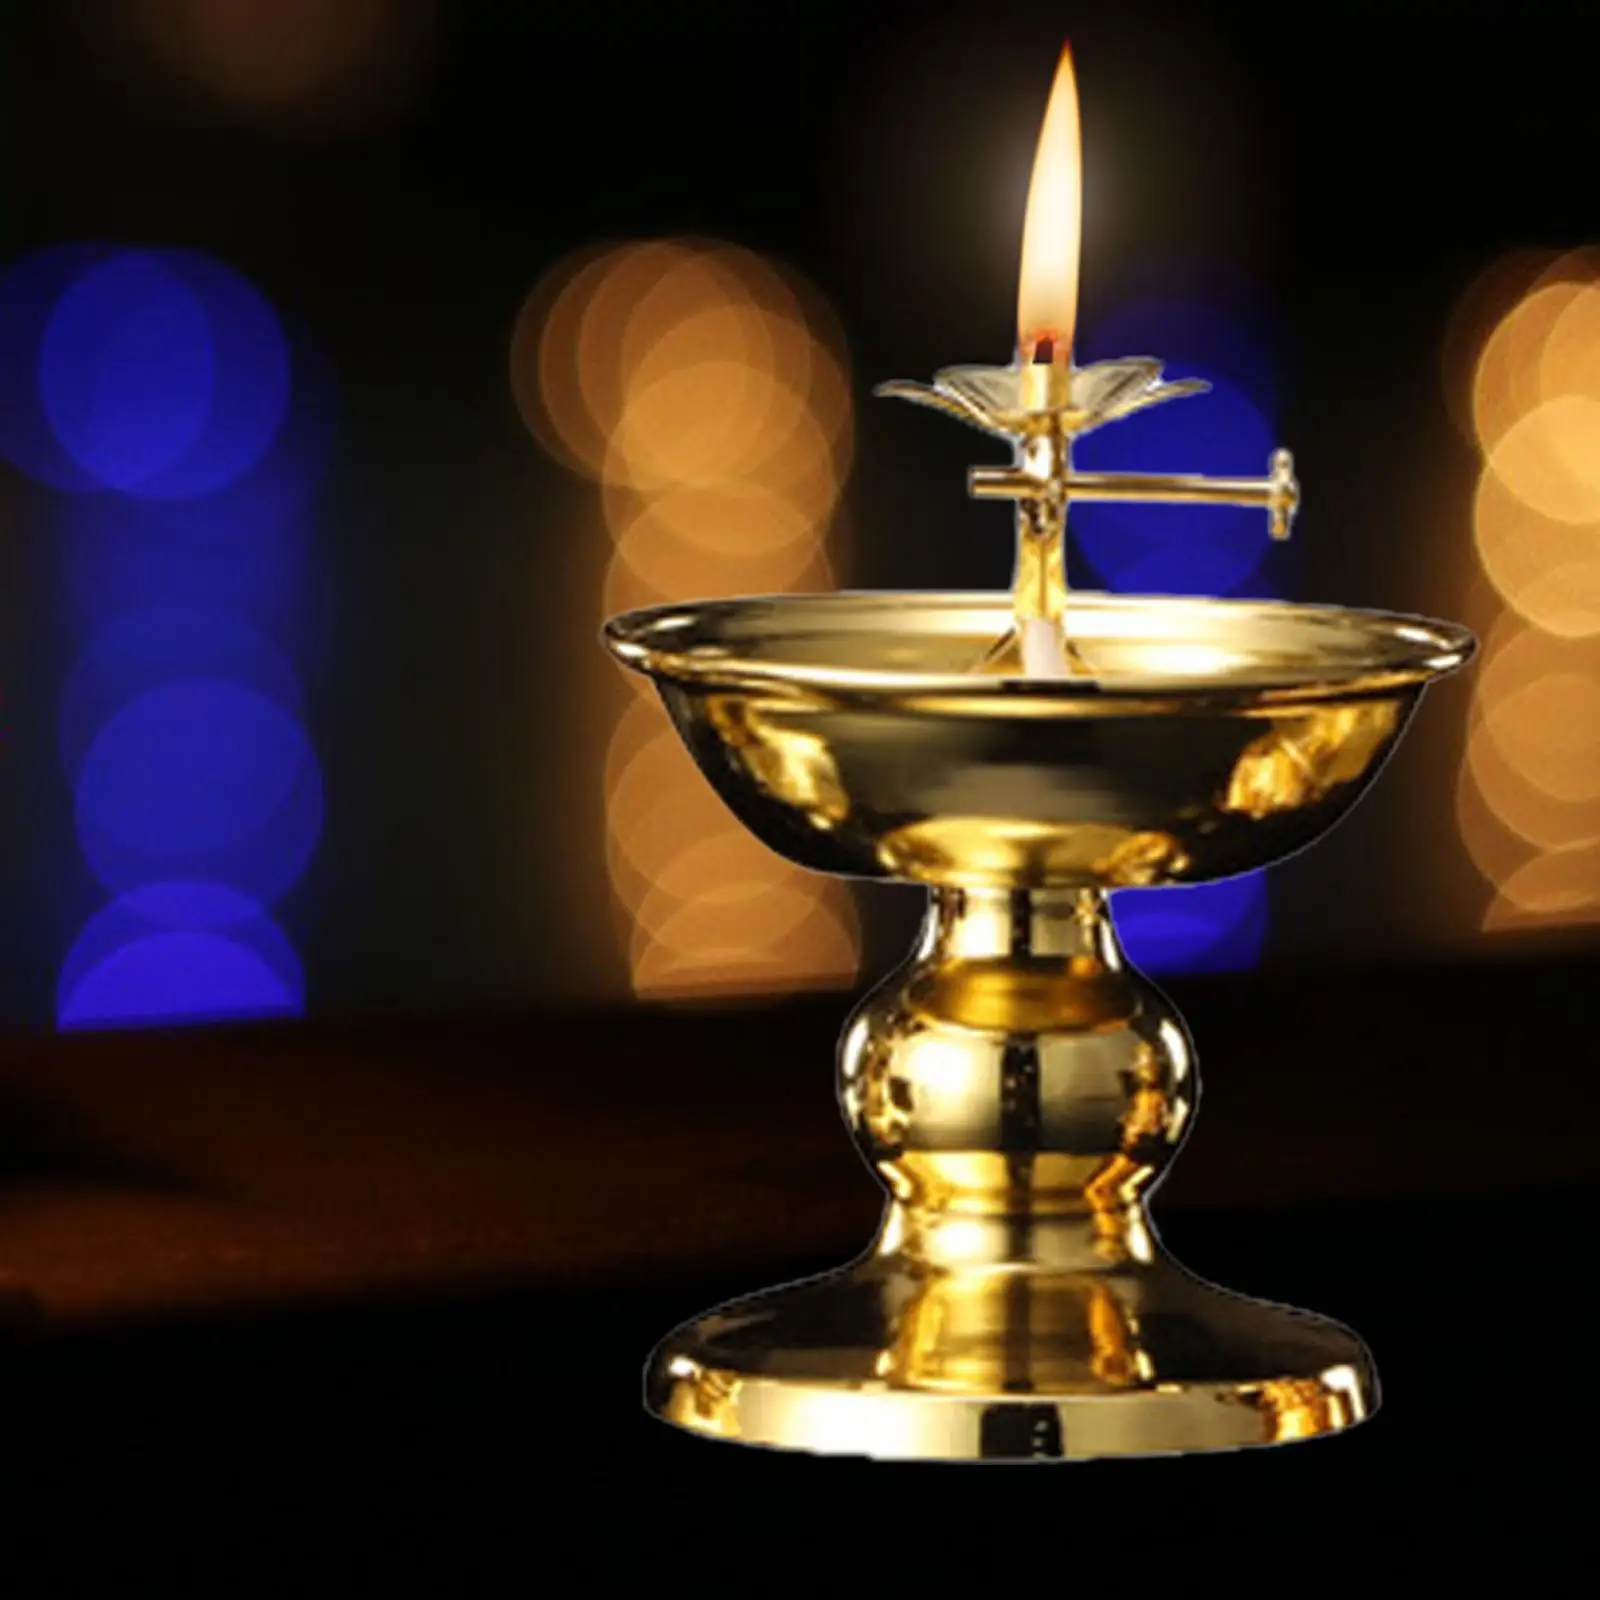 Alloy Ghee Lamp Holder Tealight Holder Buddhist Altar Supplies Temples Oil Lamp Holder for Buddha Table Home Parlor Office Decor